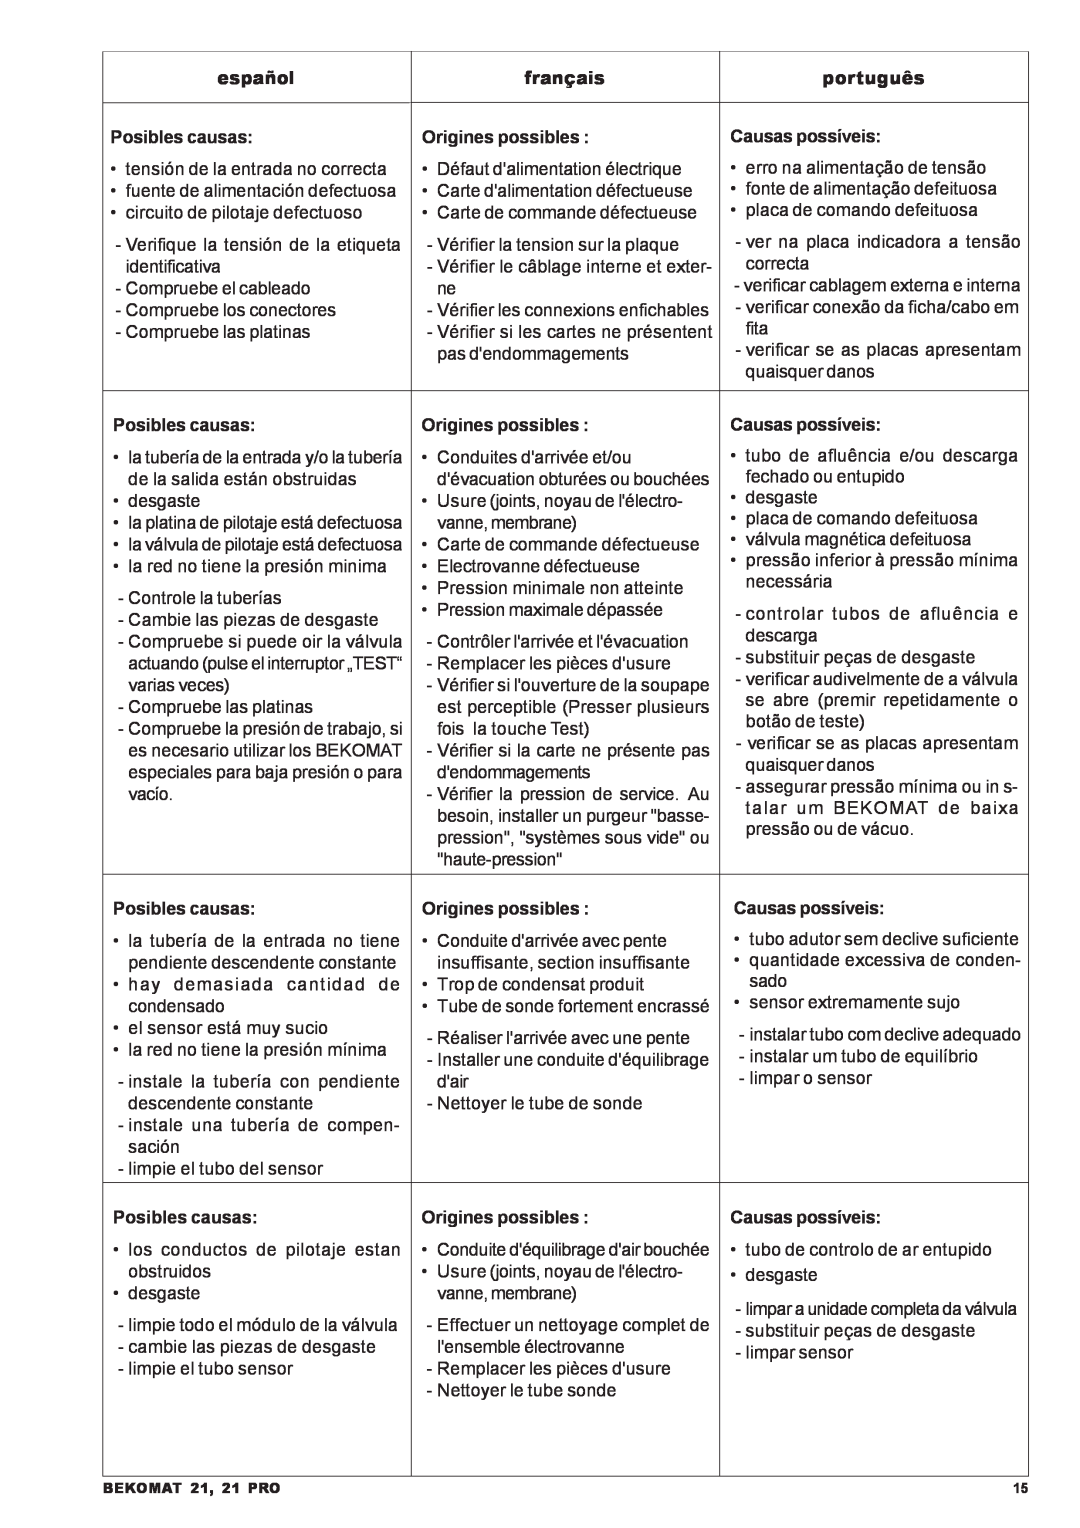 Leupold 21 PRO manual español 